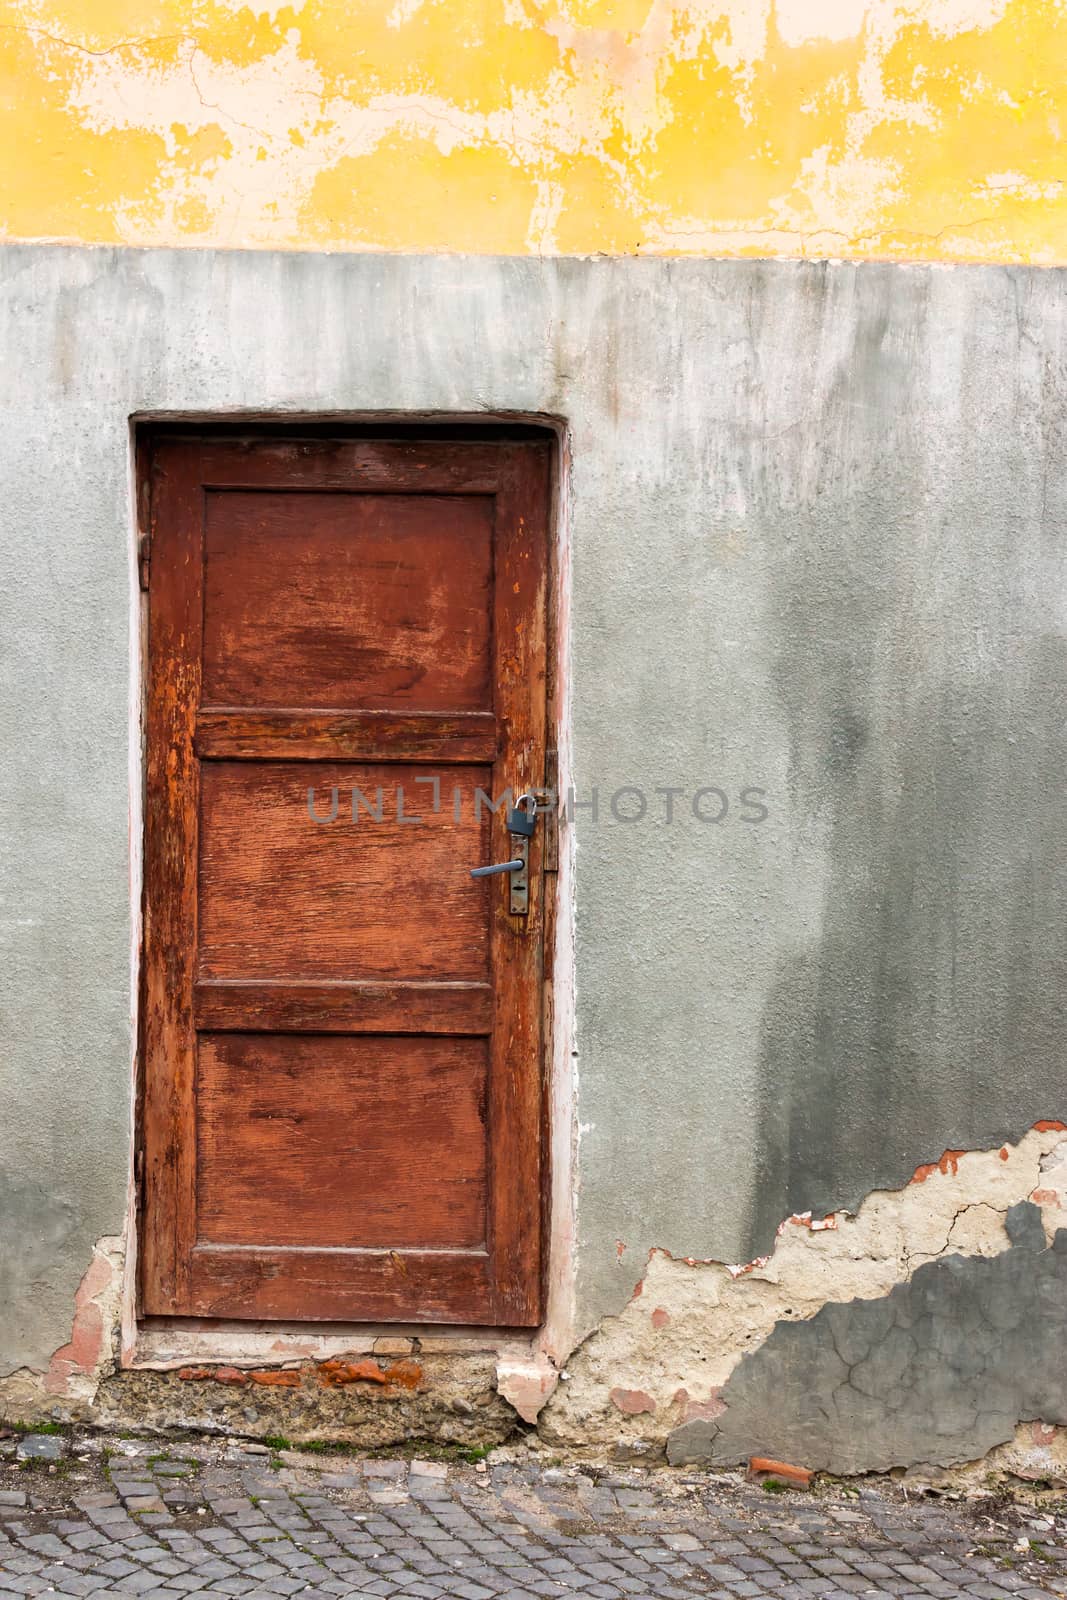 old wooden door with lock by Pellinni